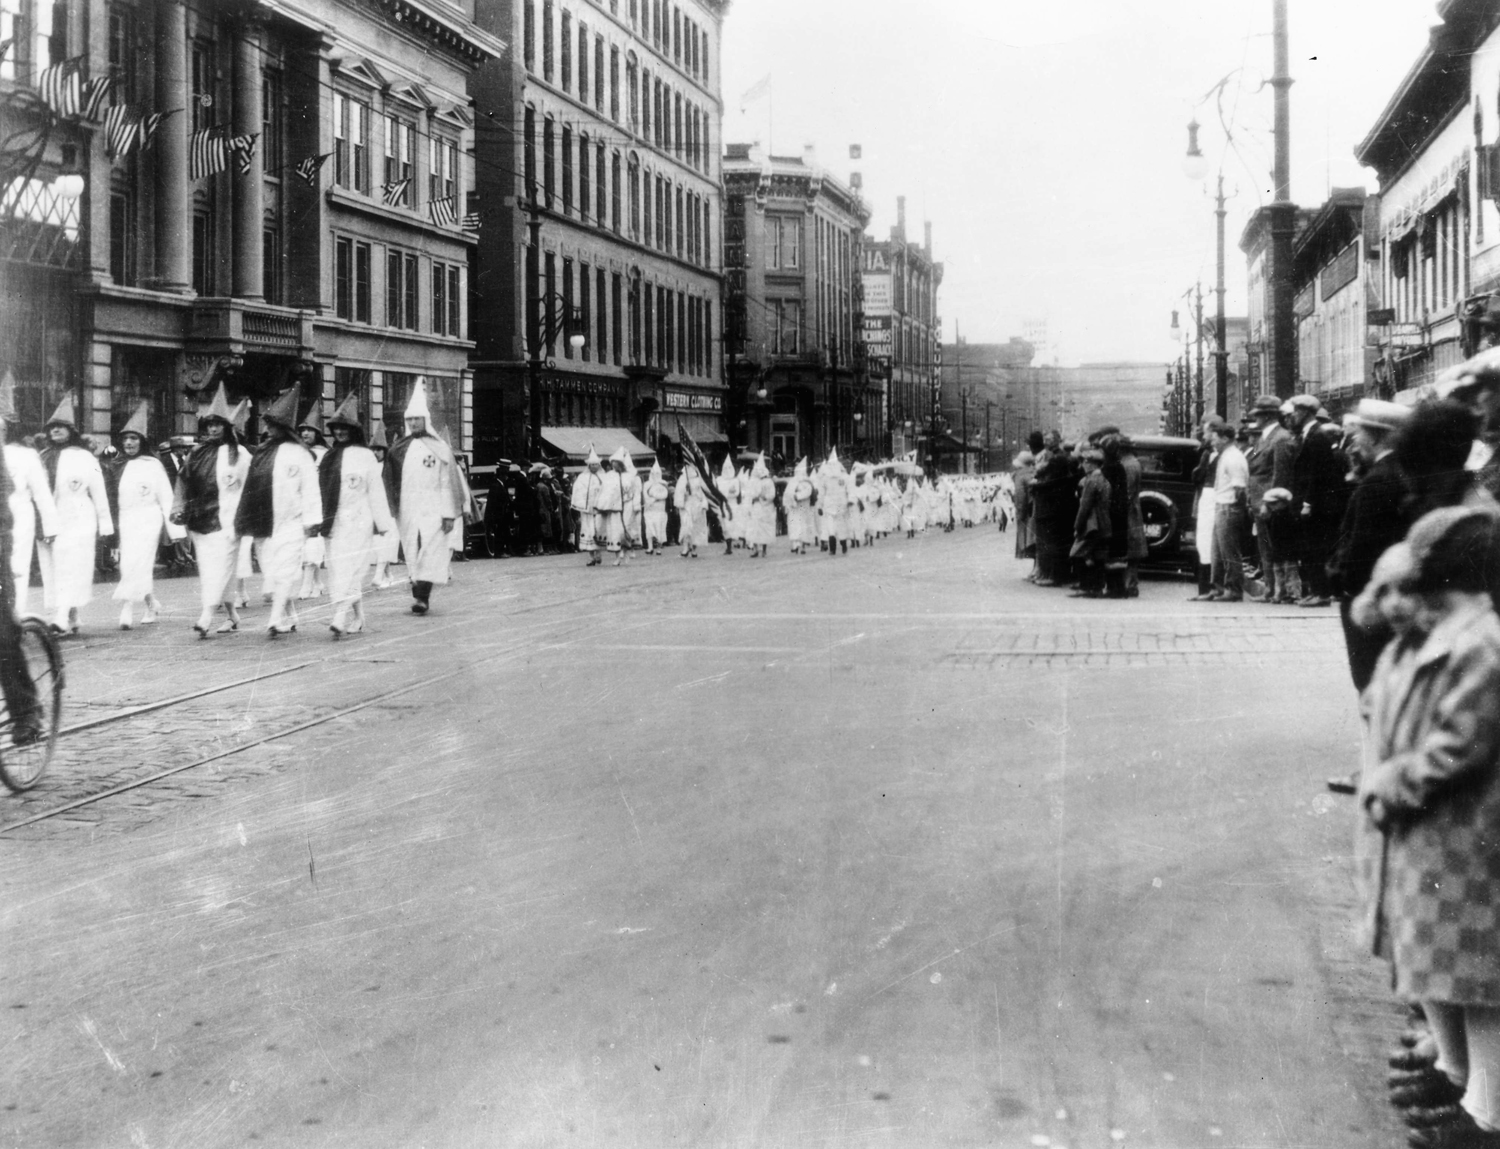 Ku Klux Klan members march down Larimer Street in Denver, 1926.